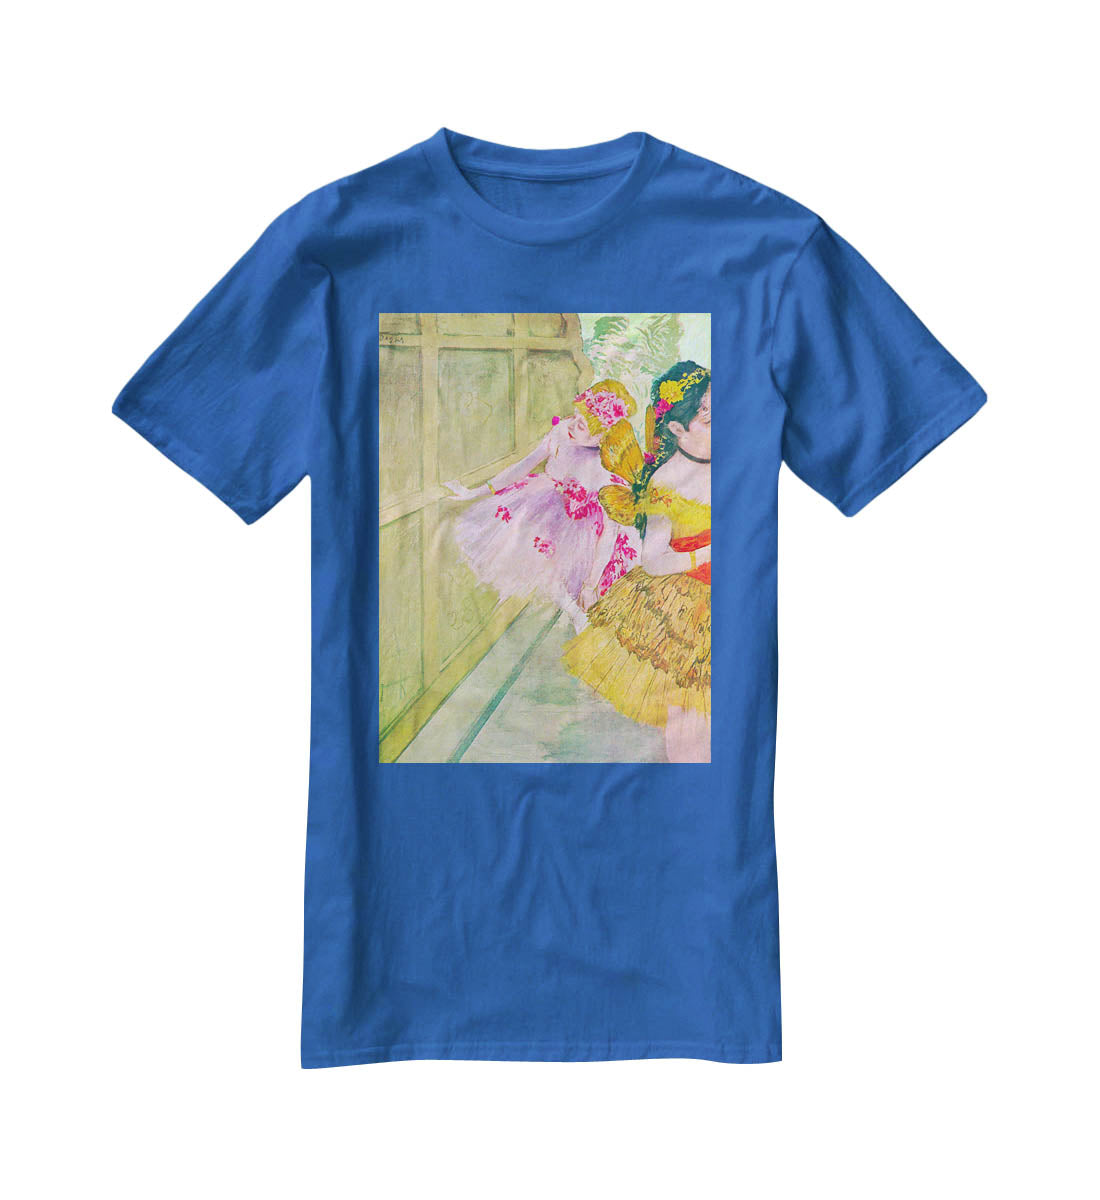 Dancers behind a backdrop by Degas T-Shirt - Canvas Art Rocks - 2